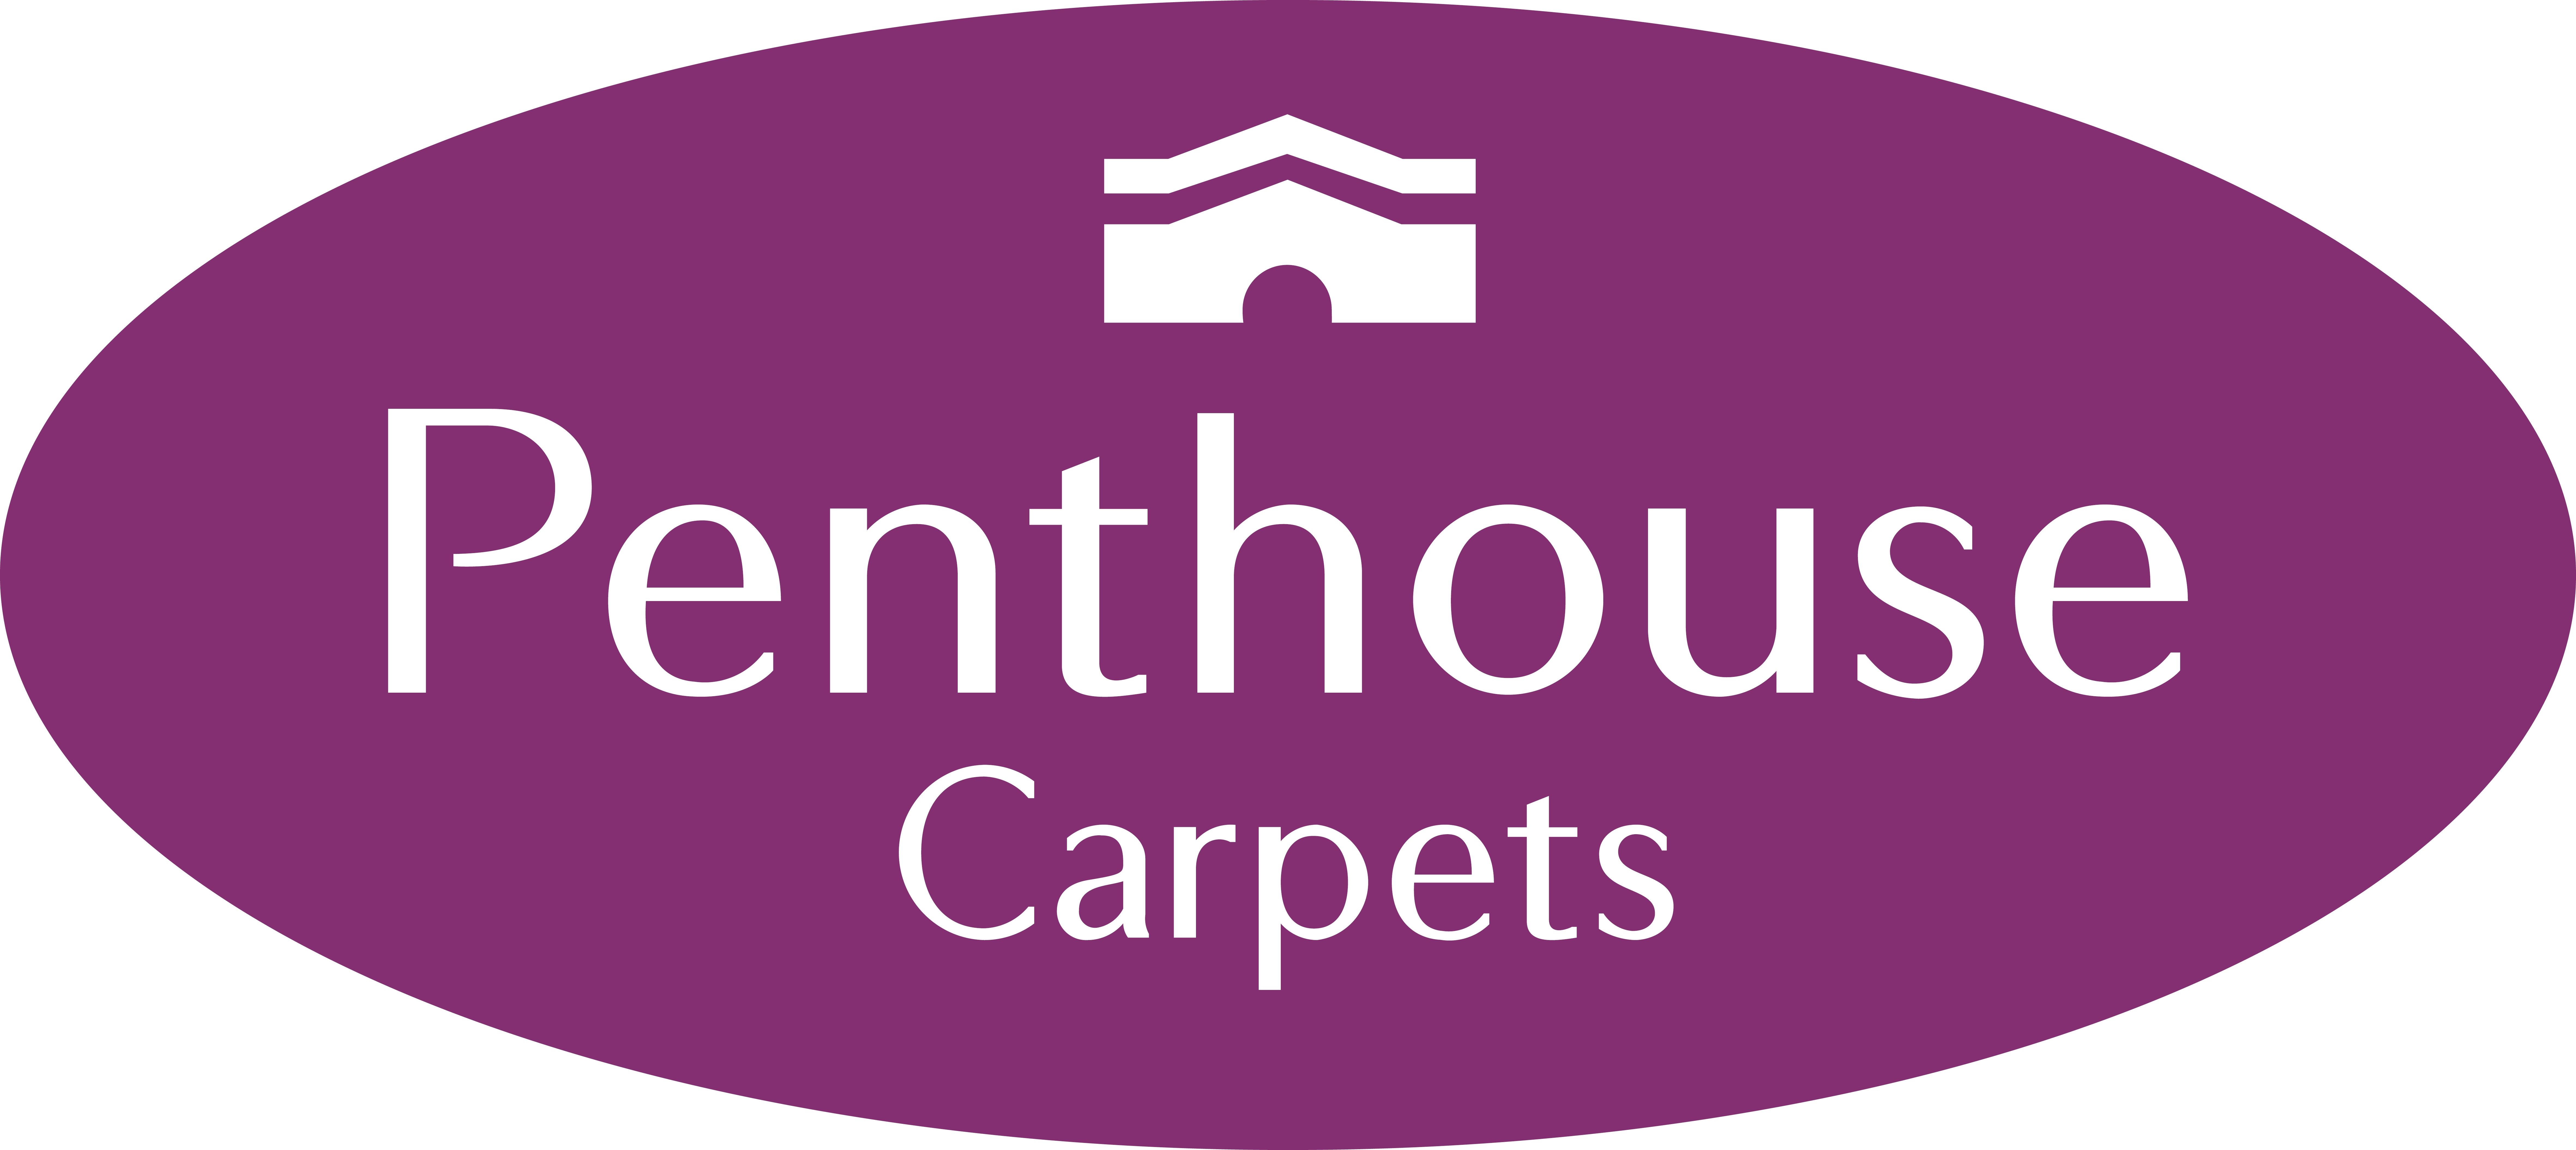 Penthouse carpets logo